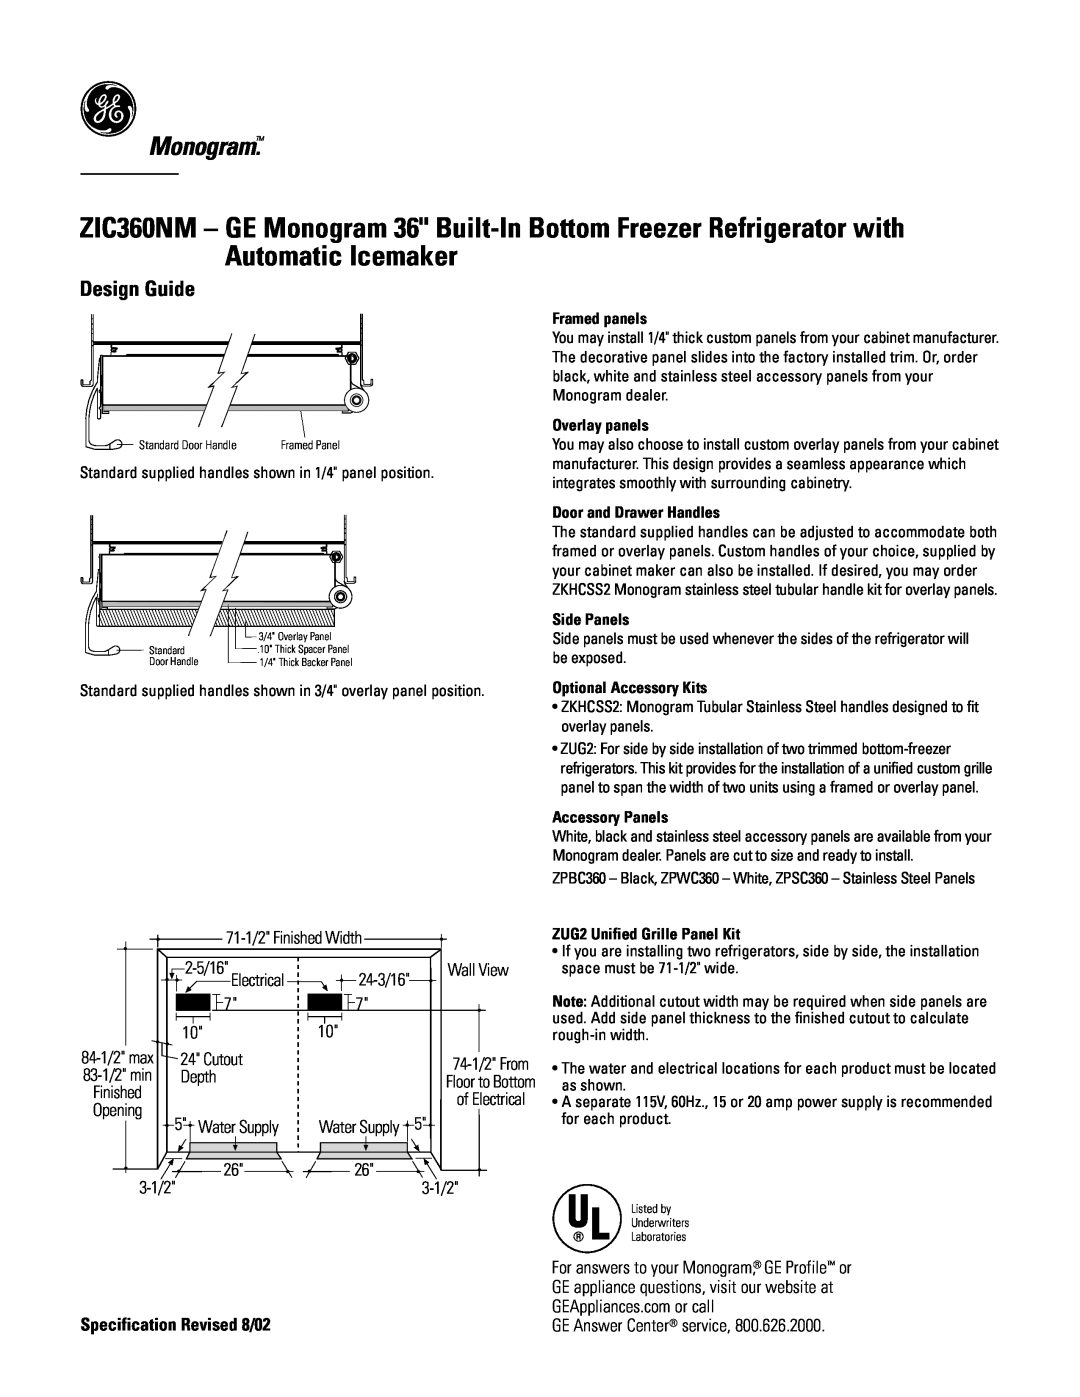 GE Monogram ZIC360NM Monogram, Design Guide, Specification Revised 8/02, Framed panels, Overlay panels, Side Panels 